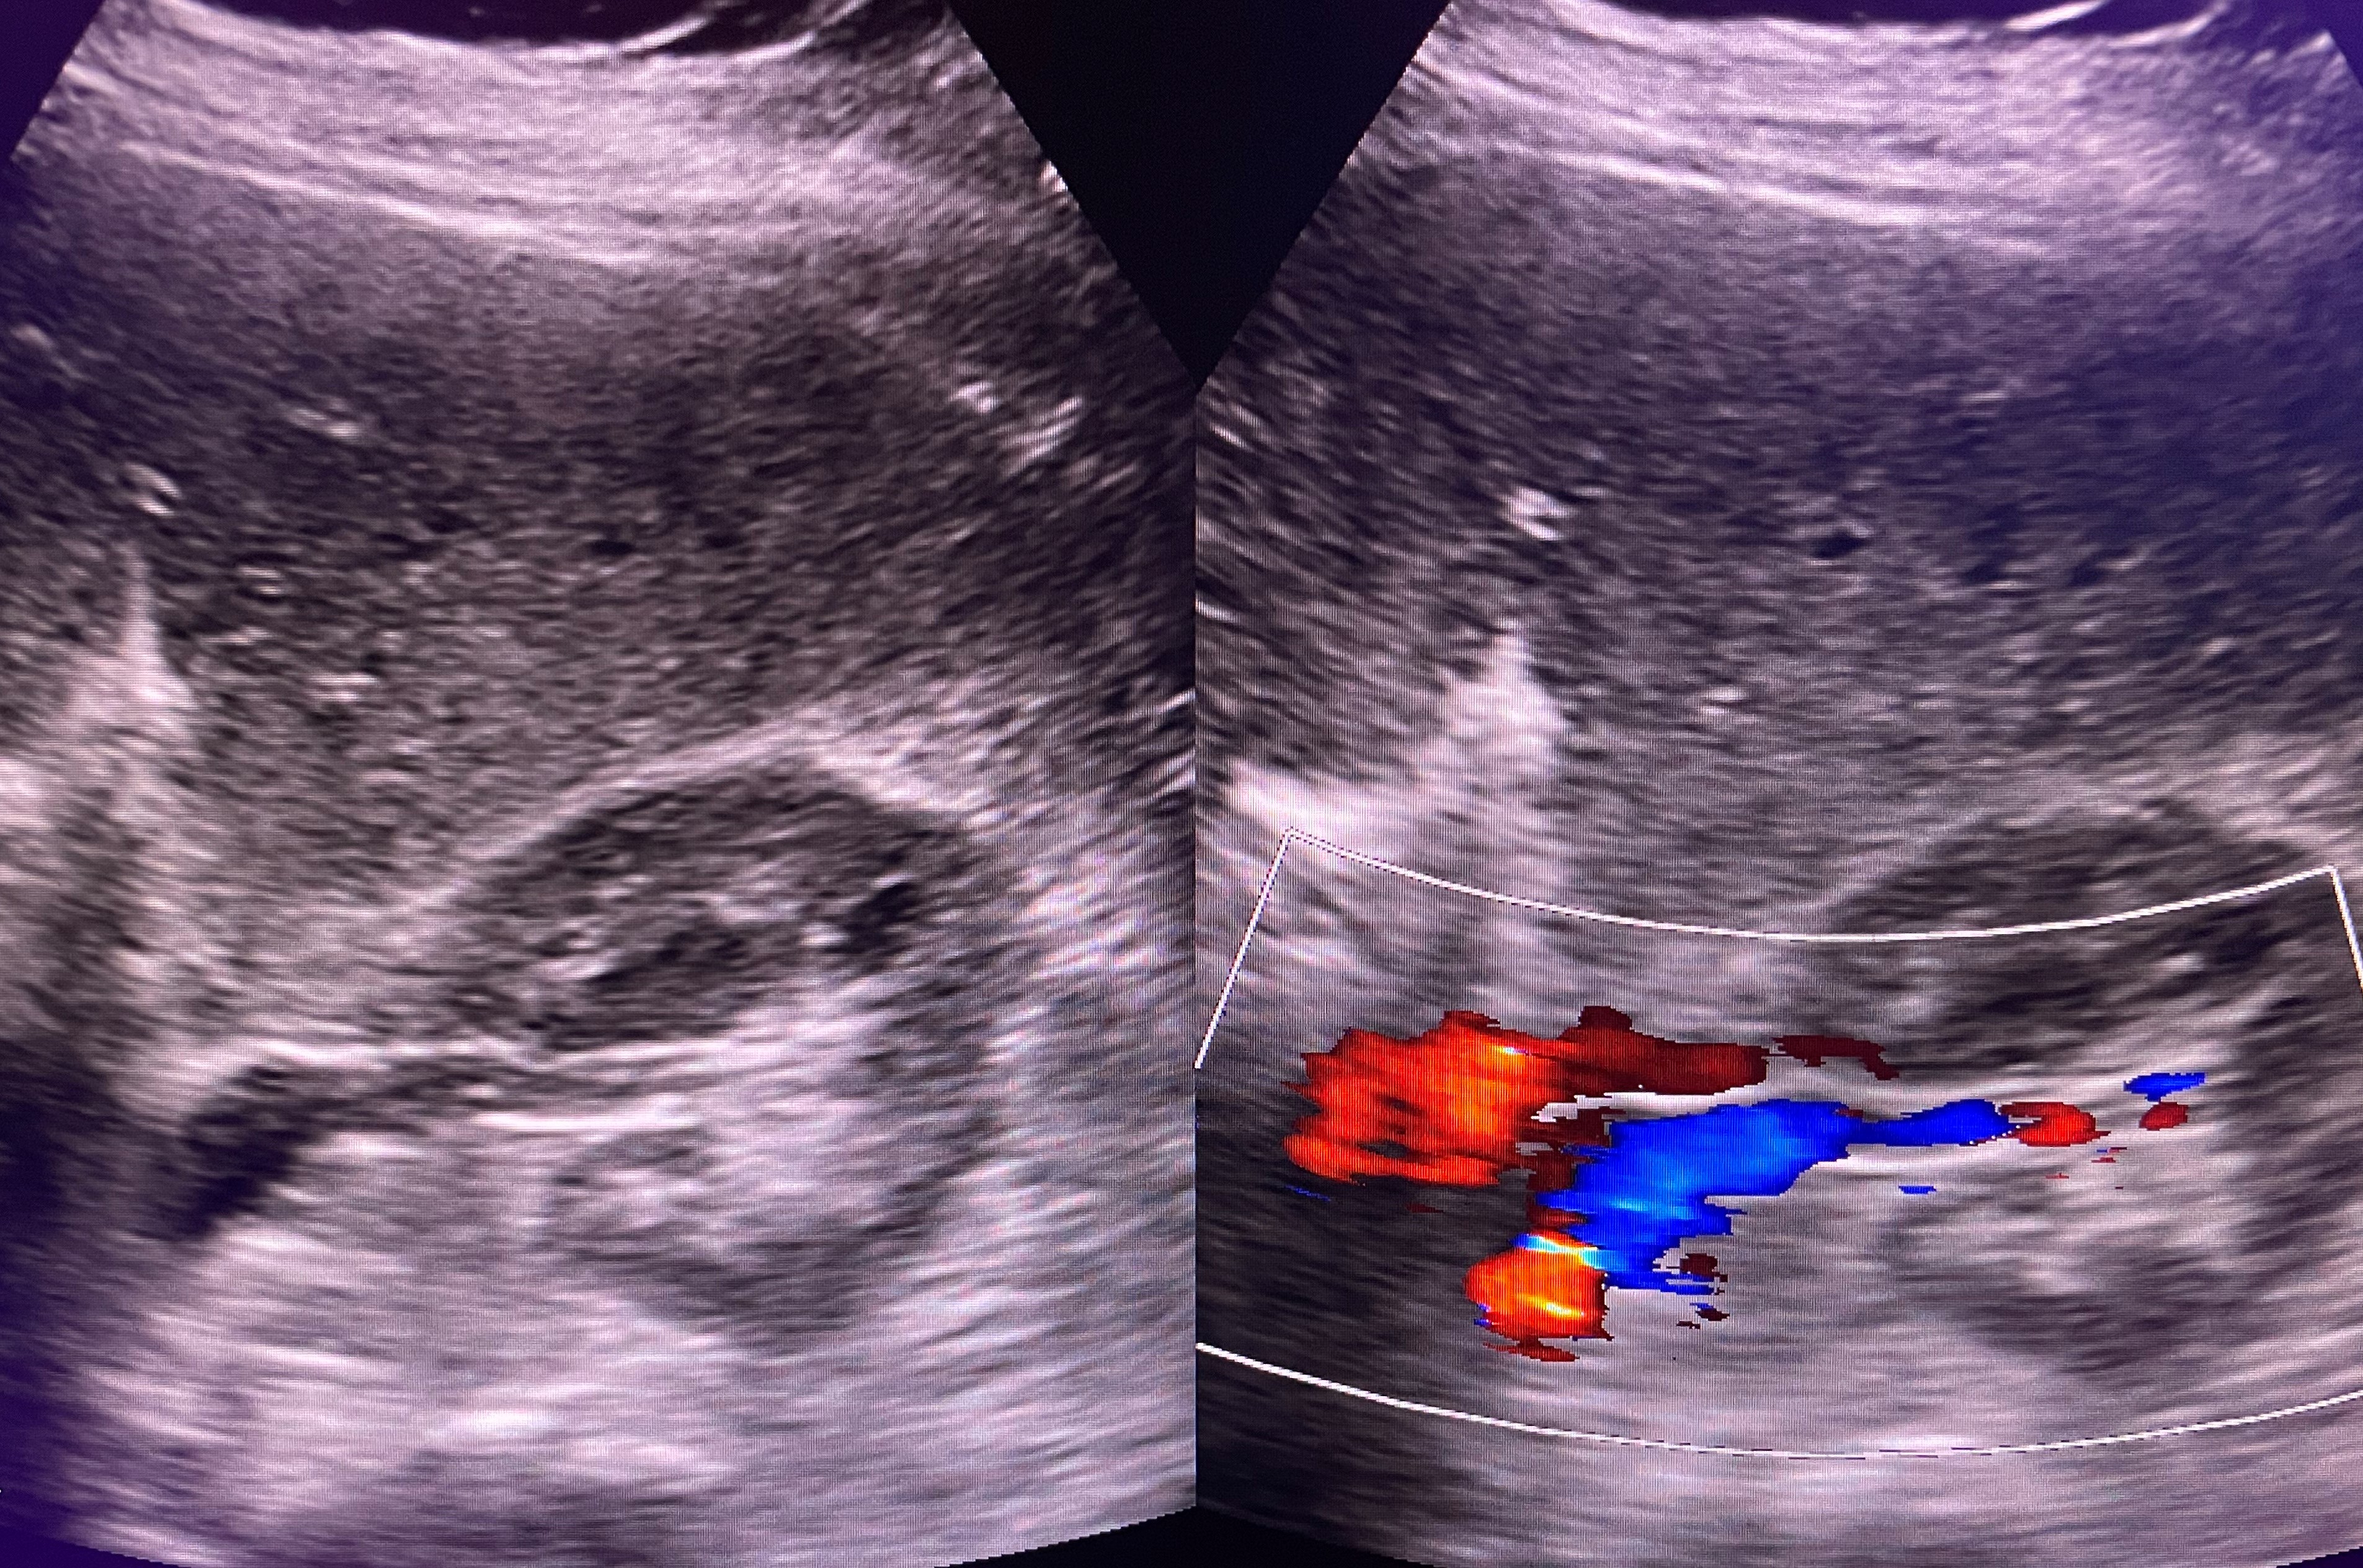 Native renal kidney parameter ultrasound image